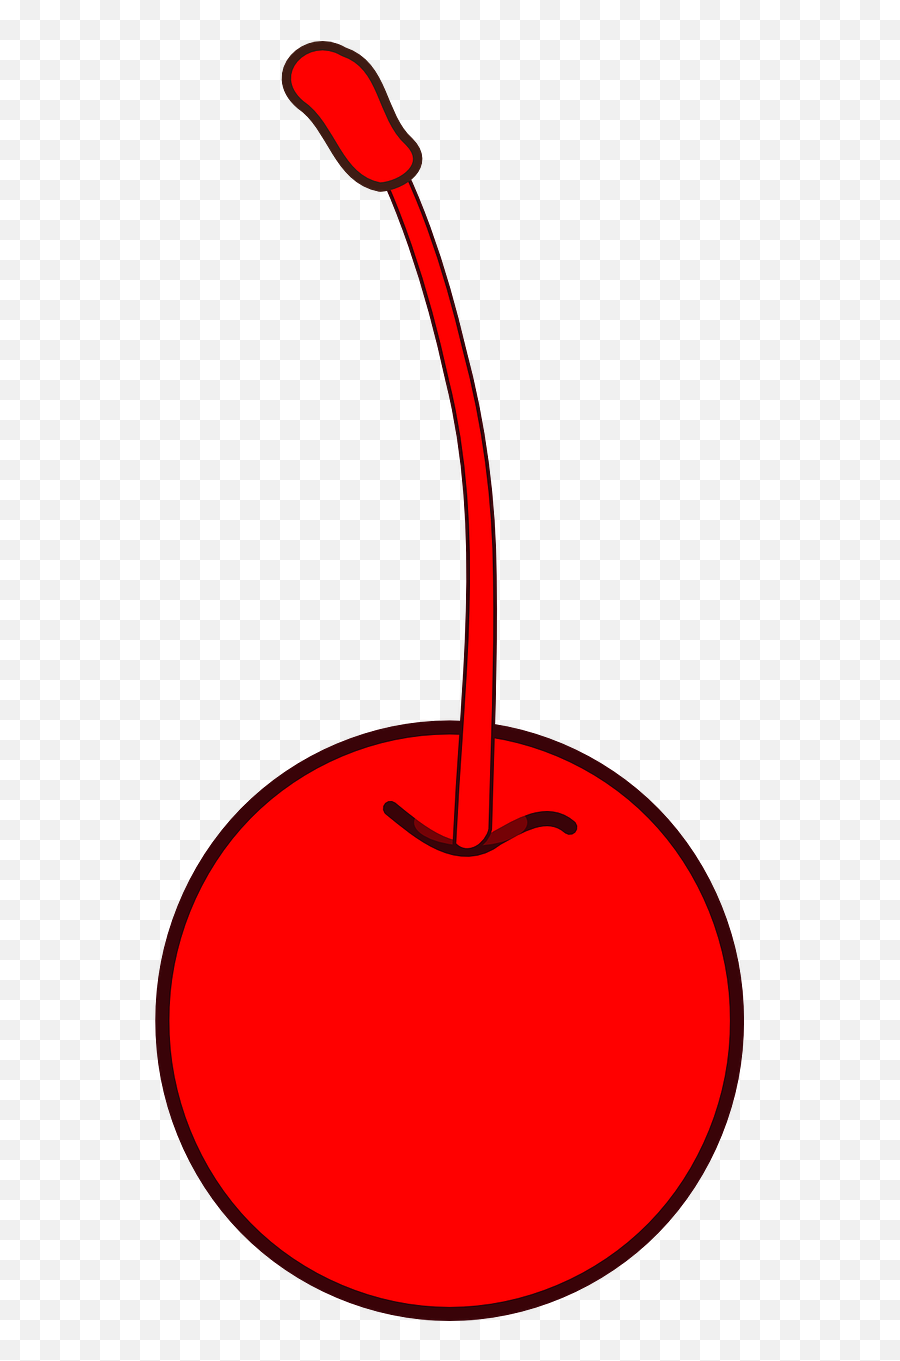 Httpswwwpicpngcomfiretruck - Redemergencyvehiclepng Clip Art Red Cherry Emoji,Eggplant Emoji With Veins